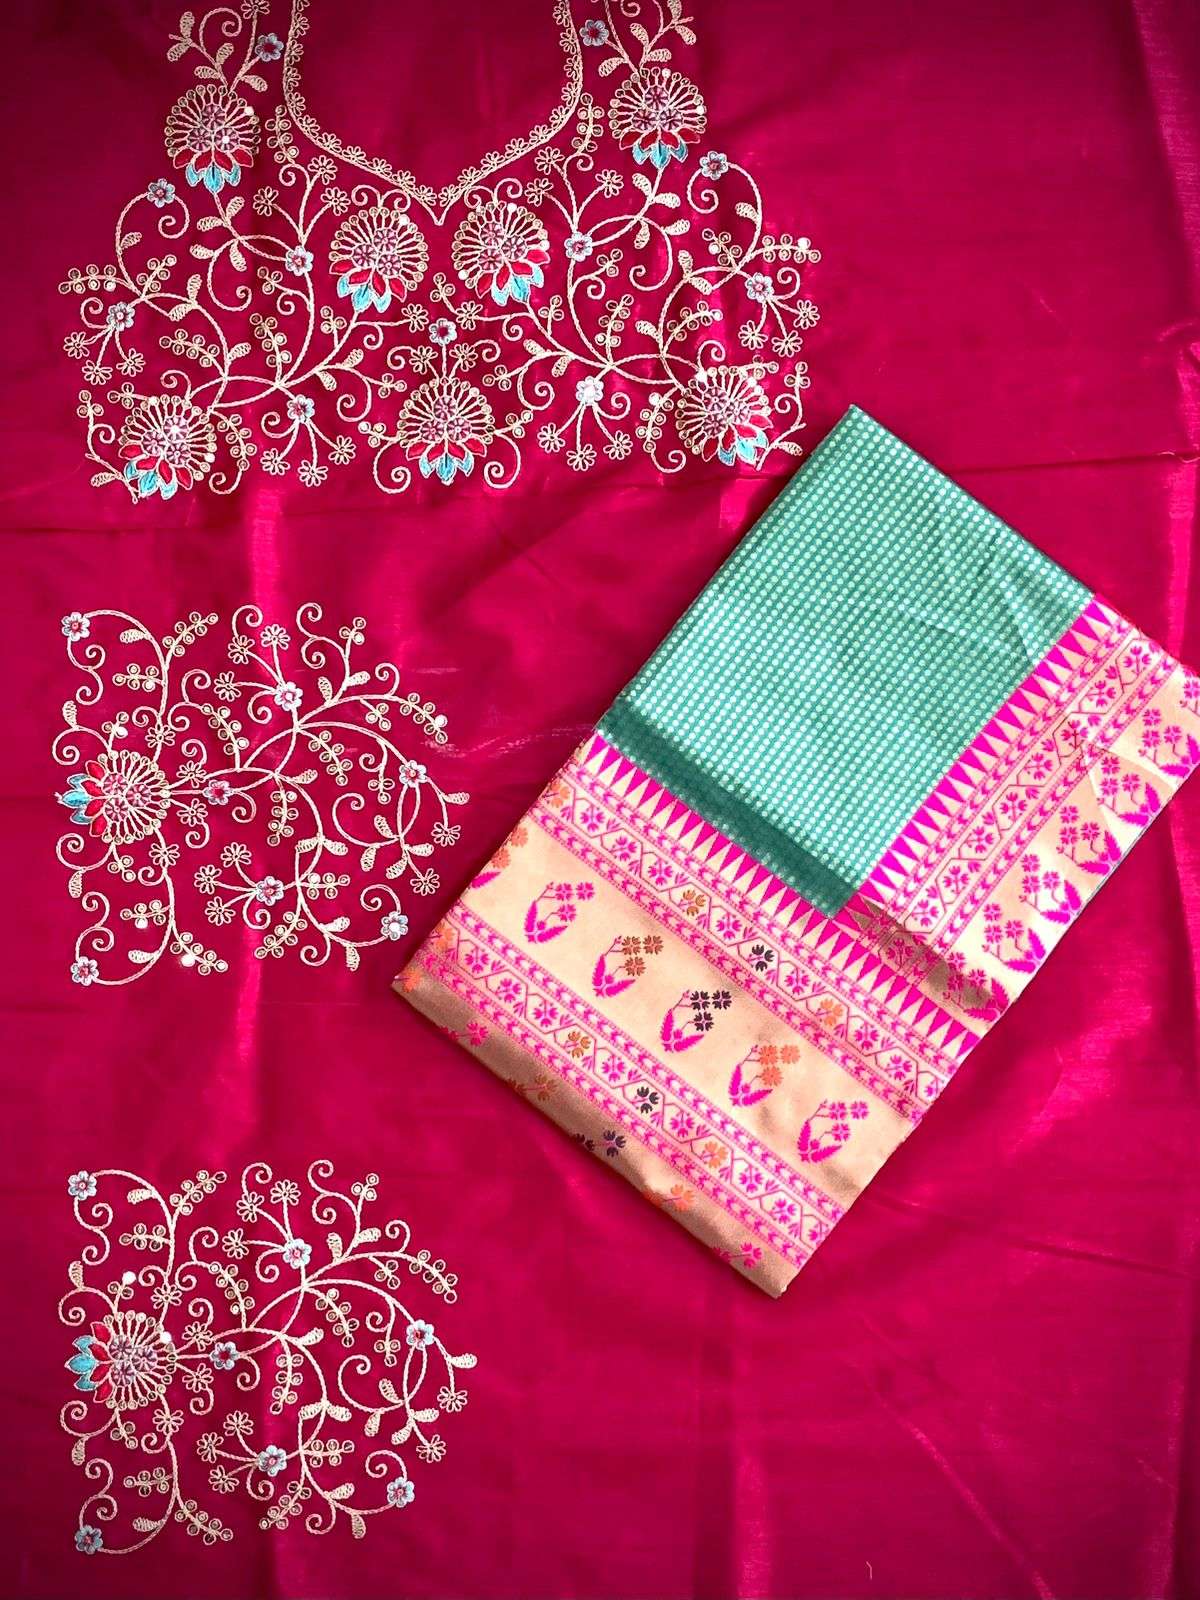 Roopam 9 Banarasi Weaving Silk Saree & Blouse Satin Banglory with Heavy Embroidery work